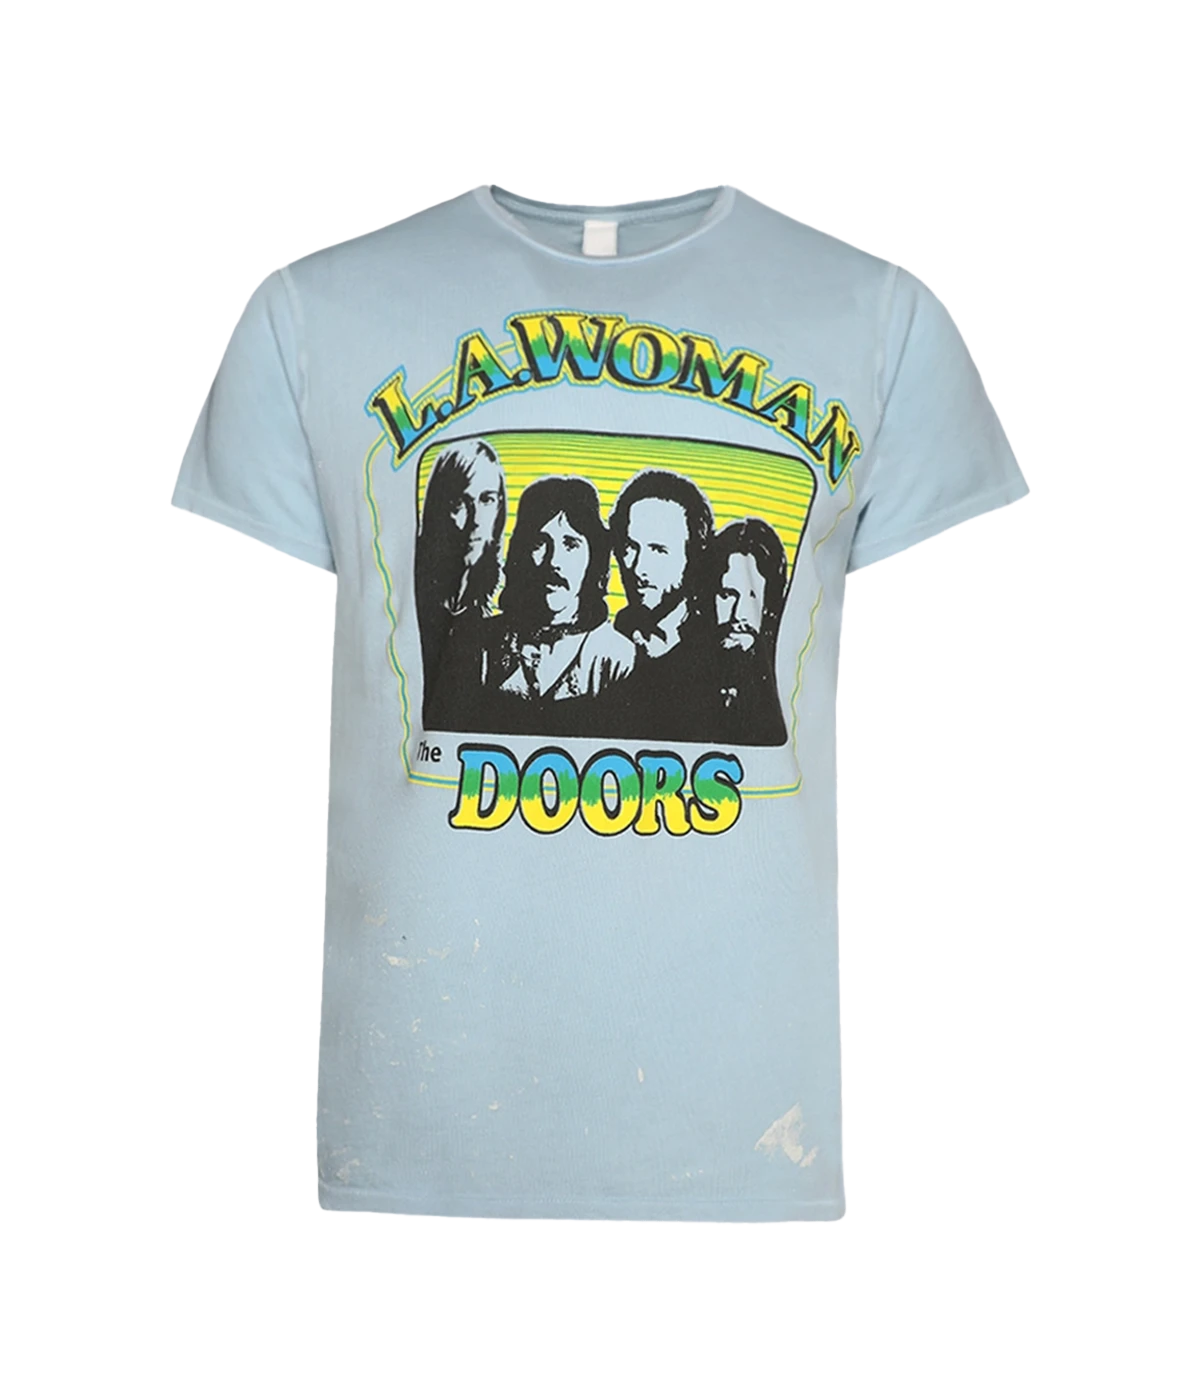 The Doors Morrison Hotel T-Shirt in Light Blue